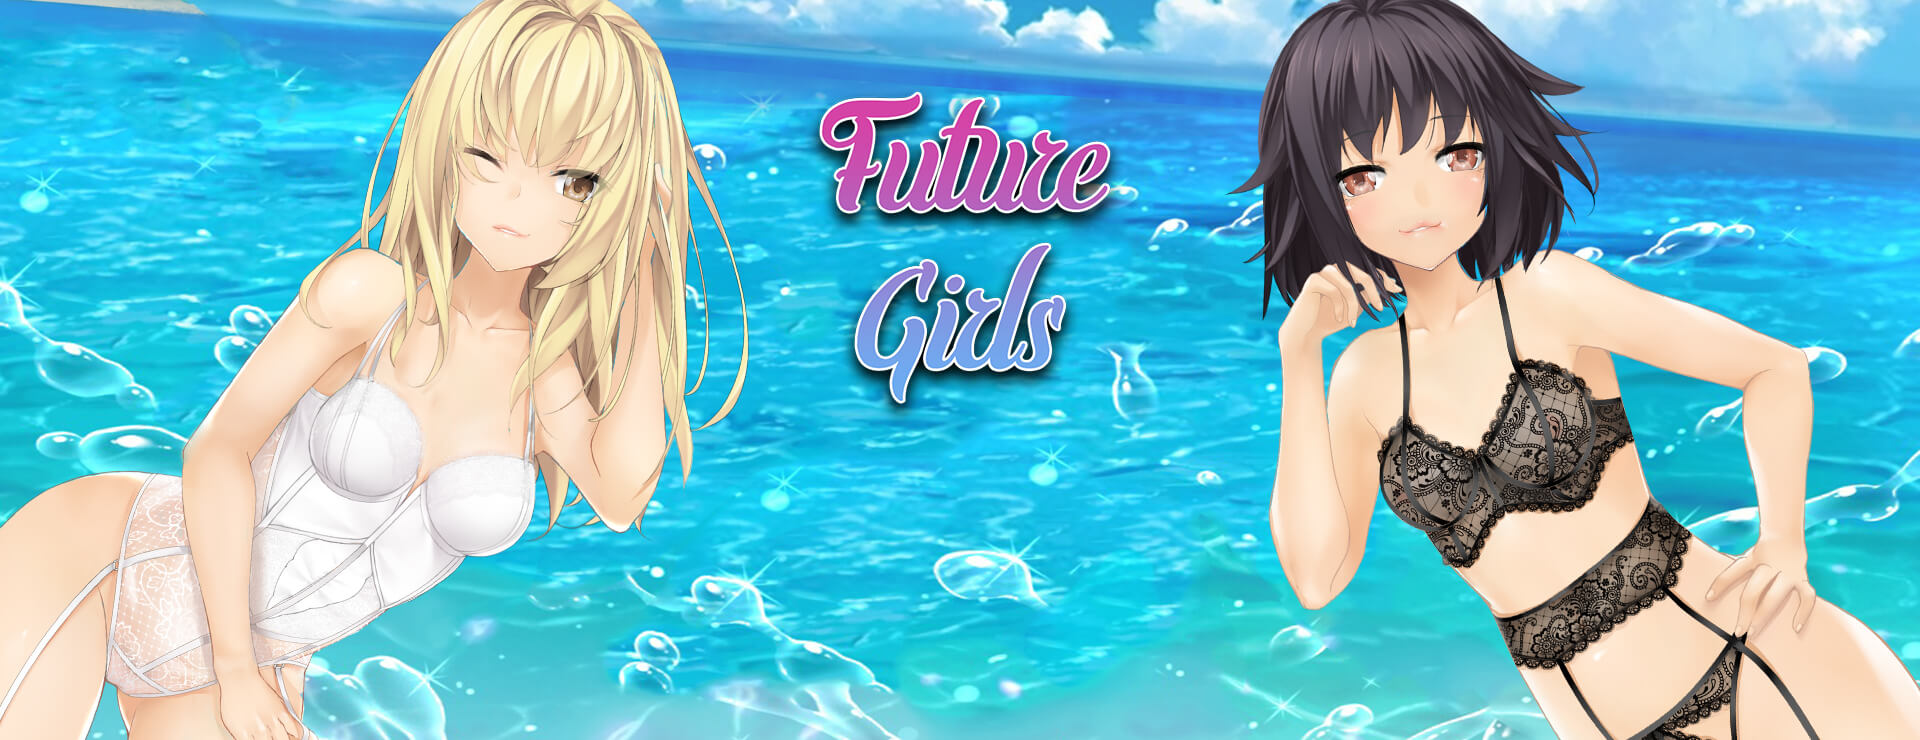 Future Girls - Novela Visual Juego